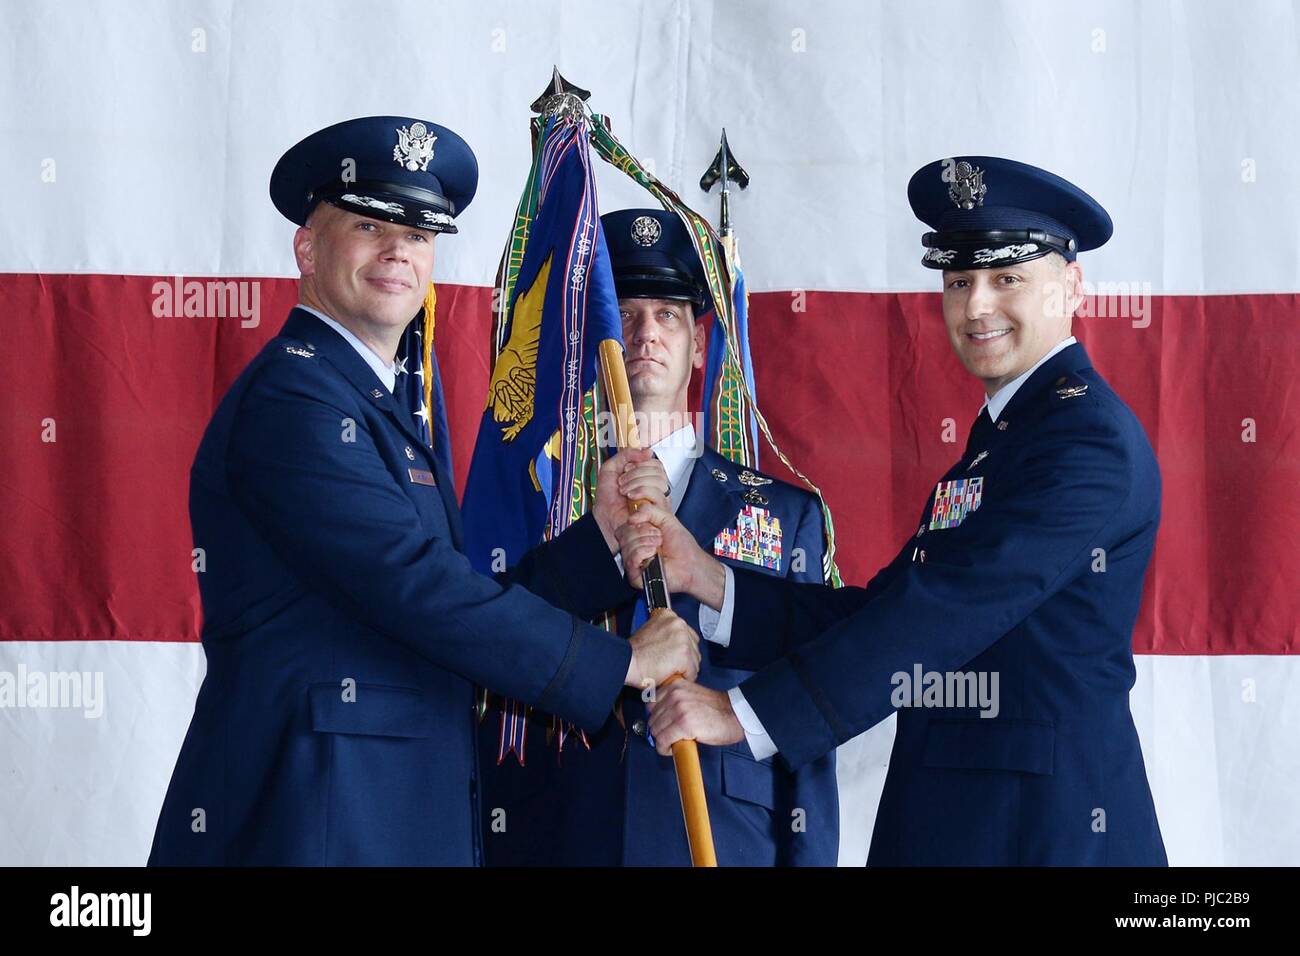 Medical group civilian earns Purple Ribbon Award > Offutt Air Force Base >  News